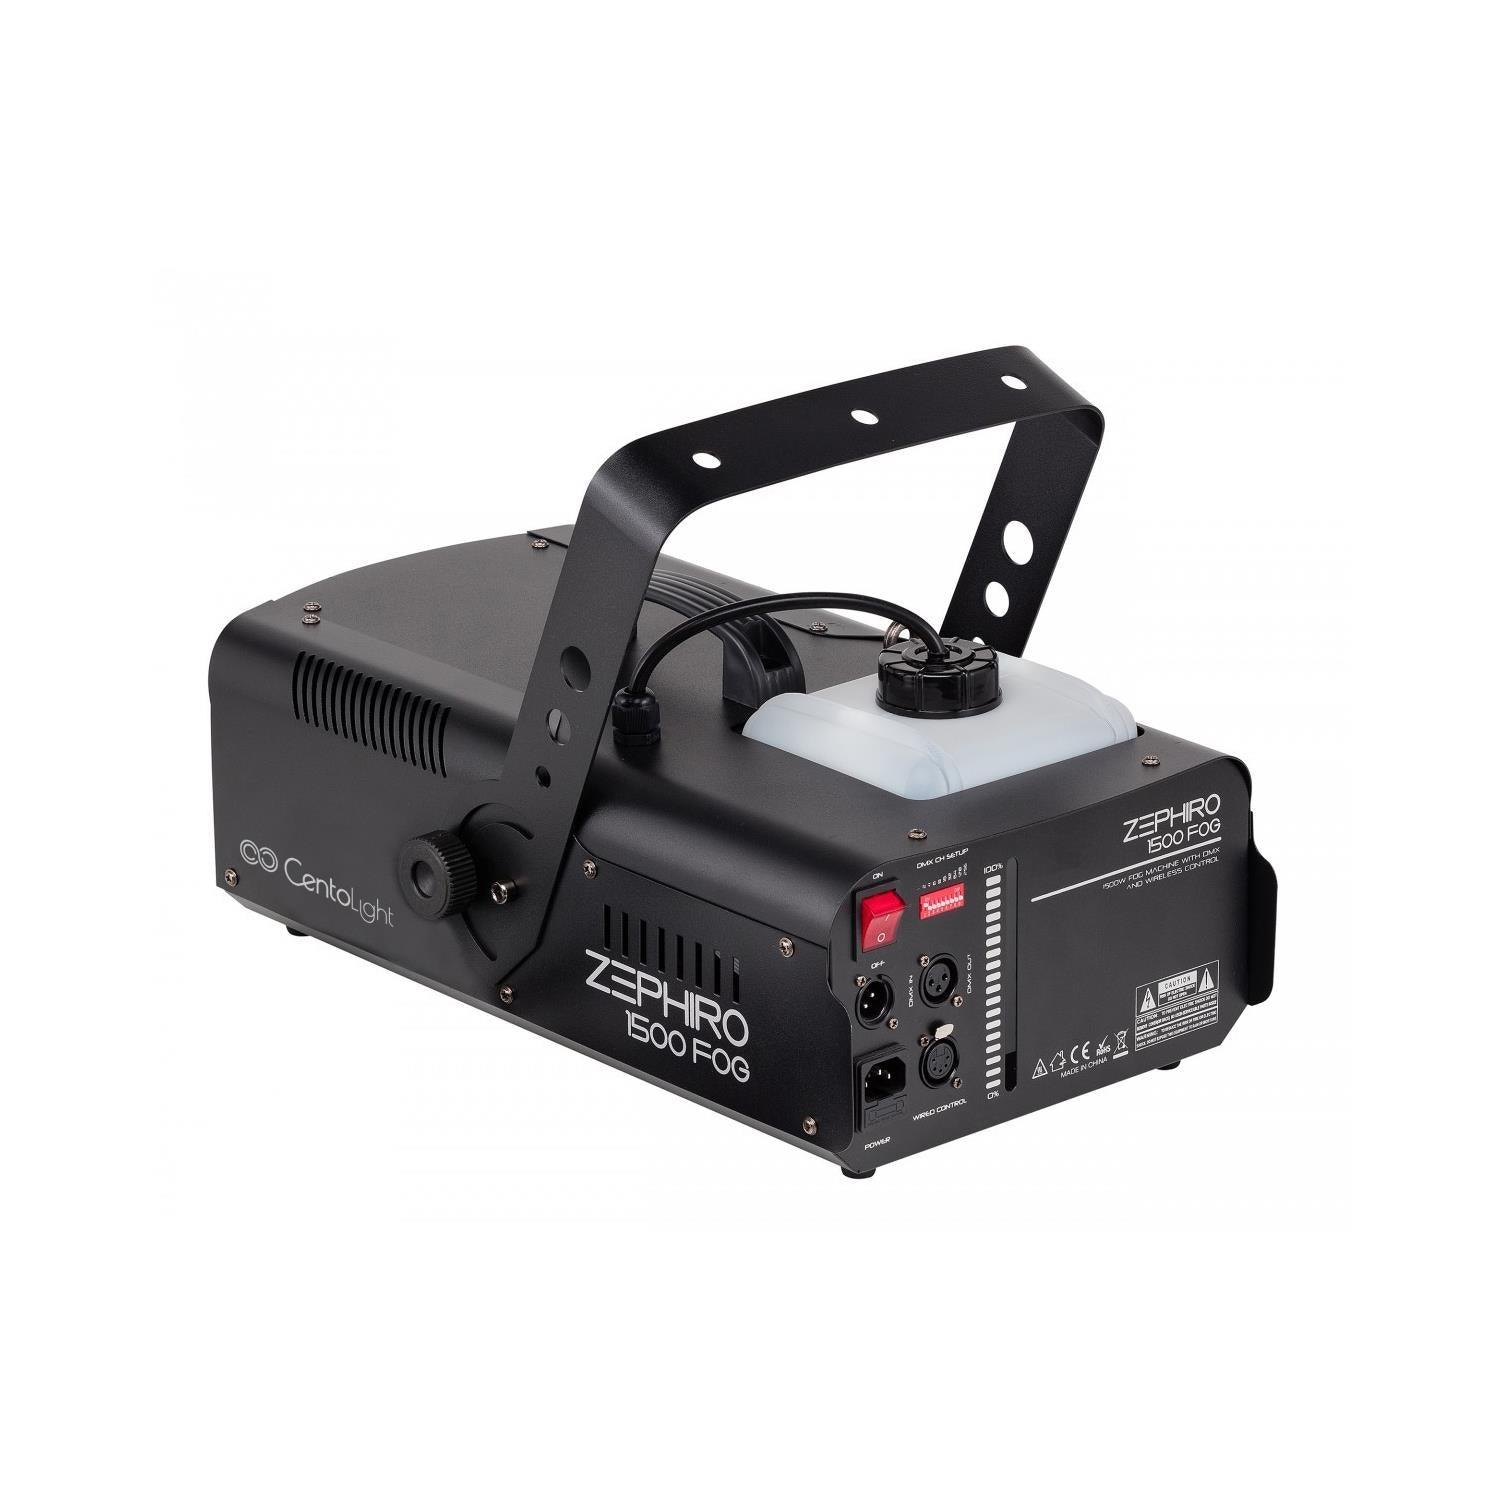 Centolight Zephiro Fog 1500 Powerful Fog Machine with Wireless Controller - DY Pro Audio